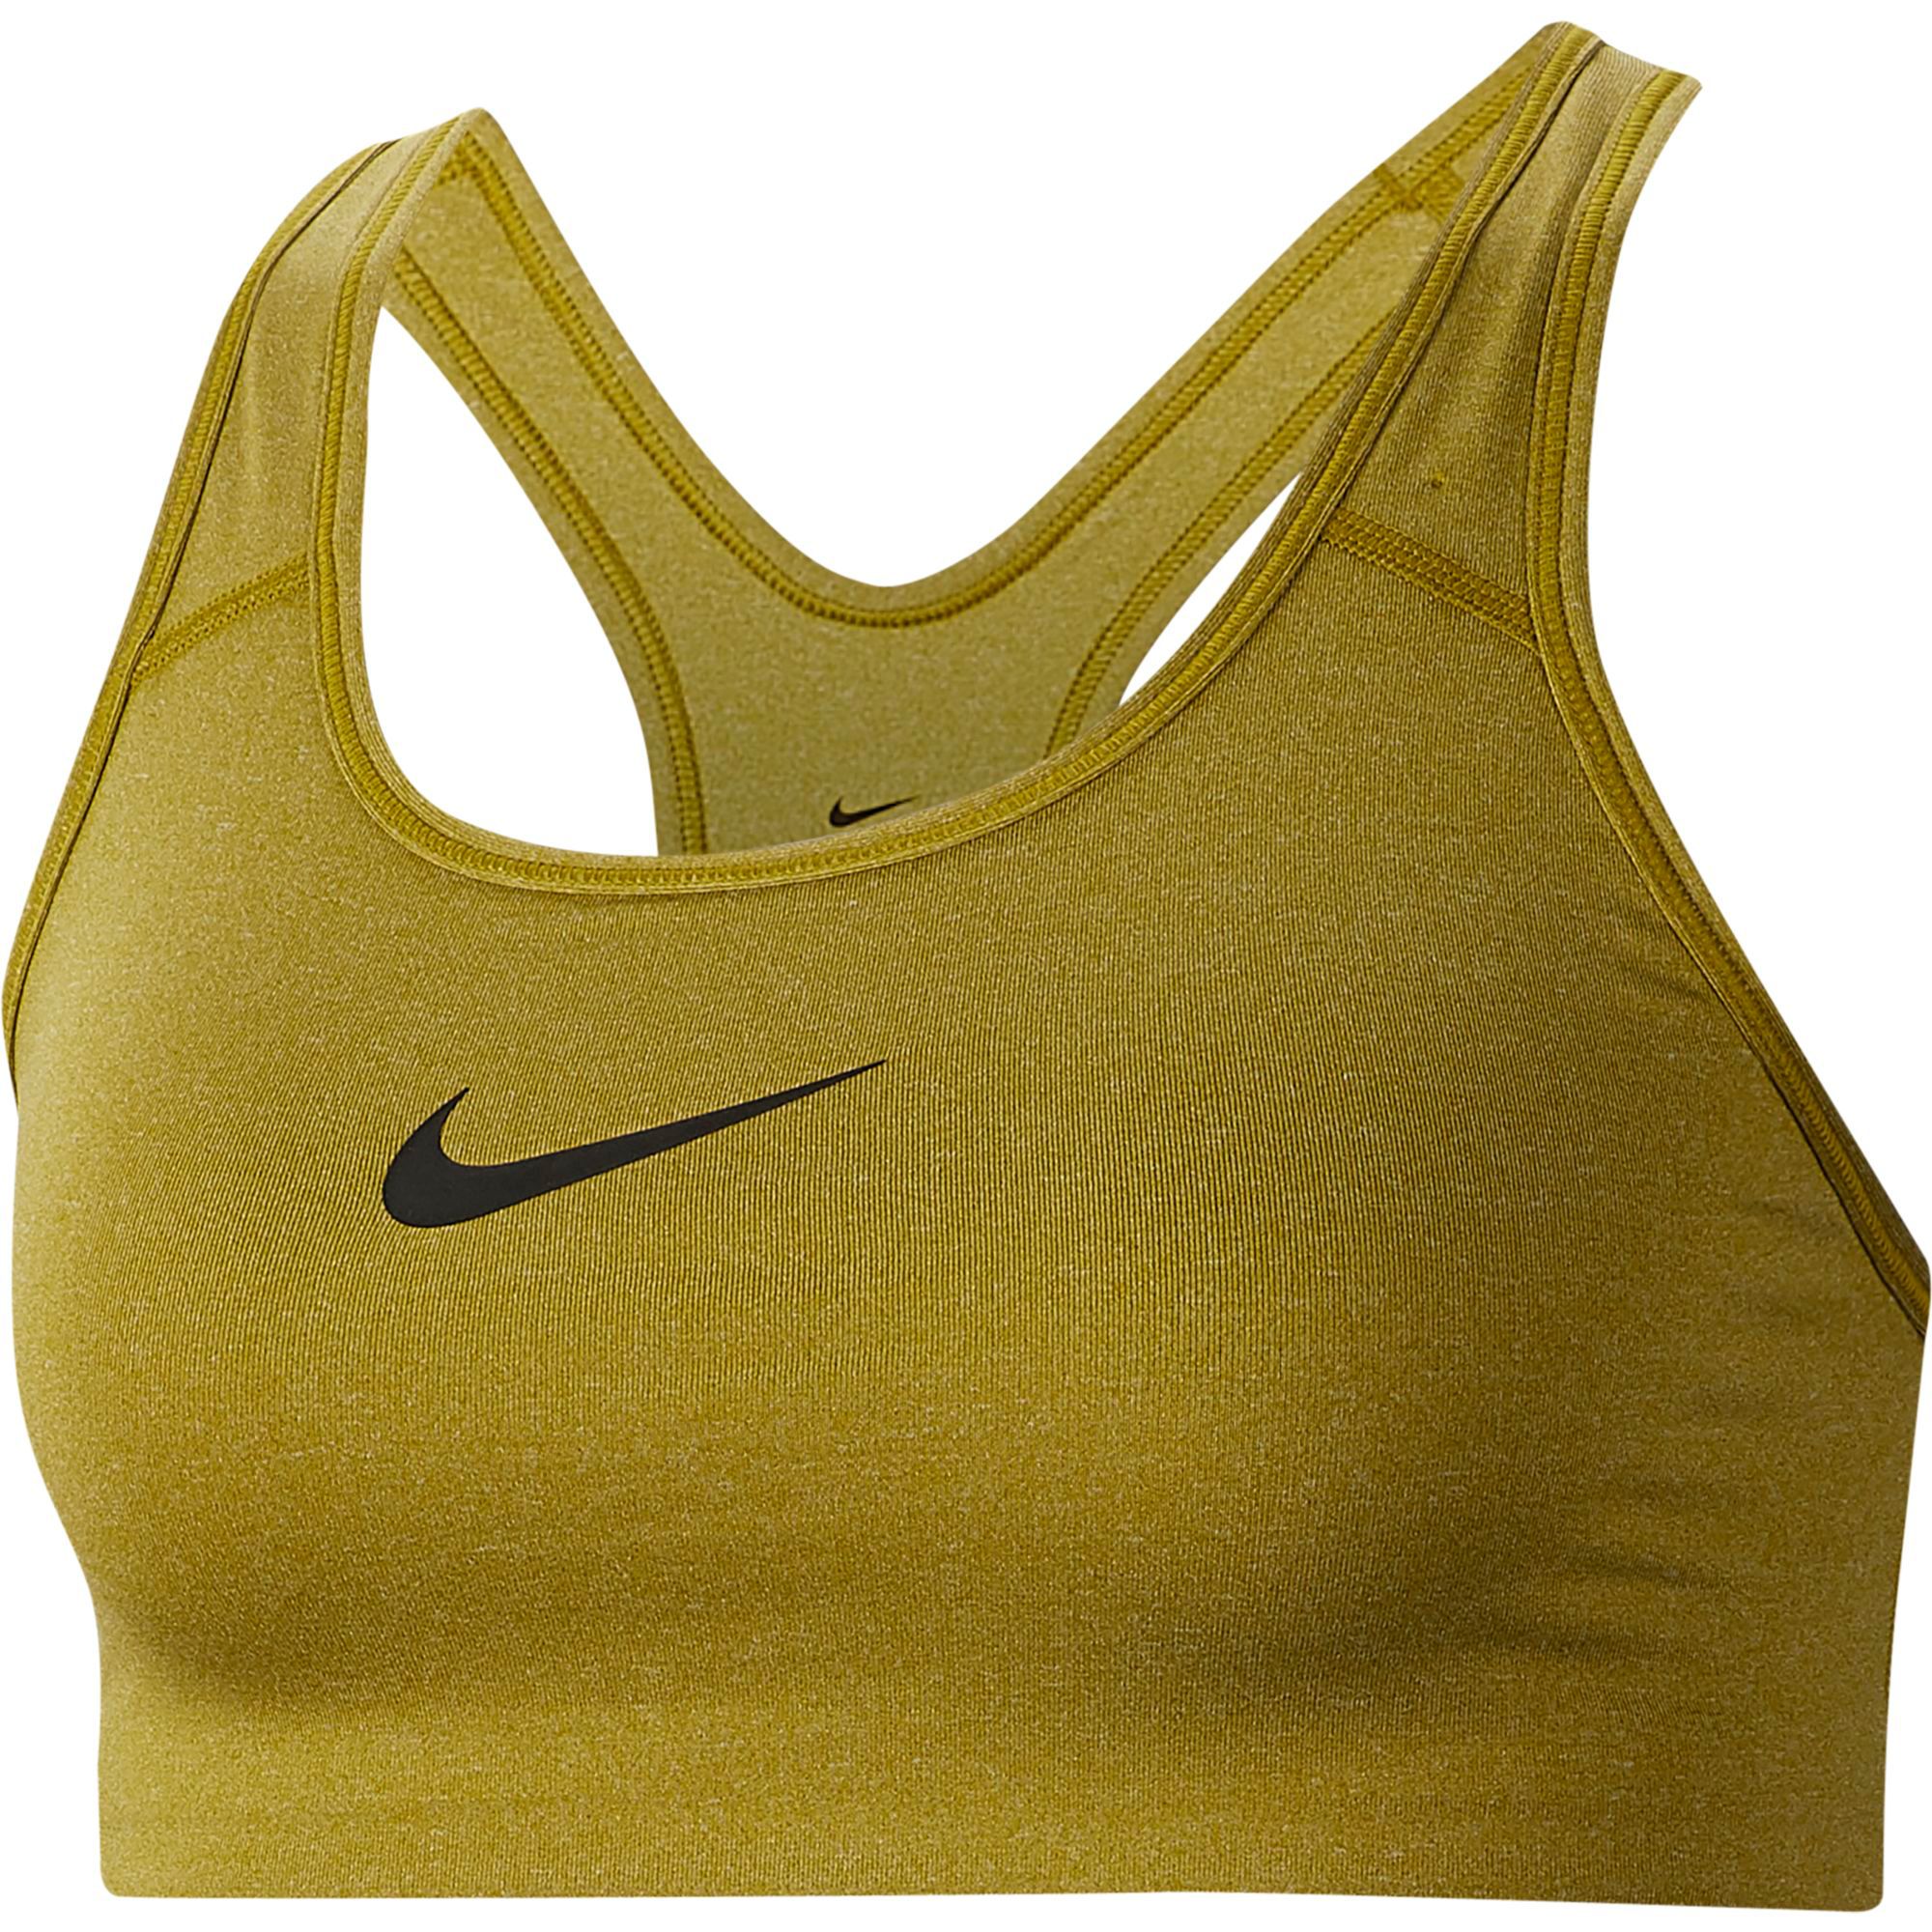 the sports bra